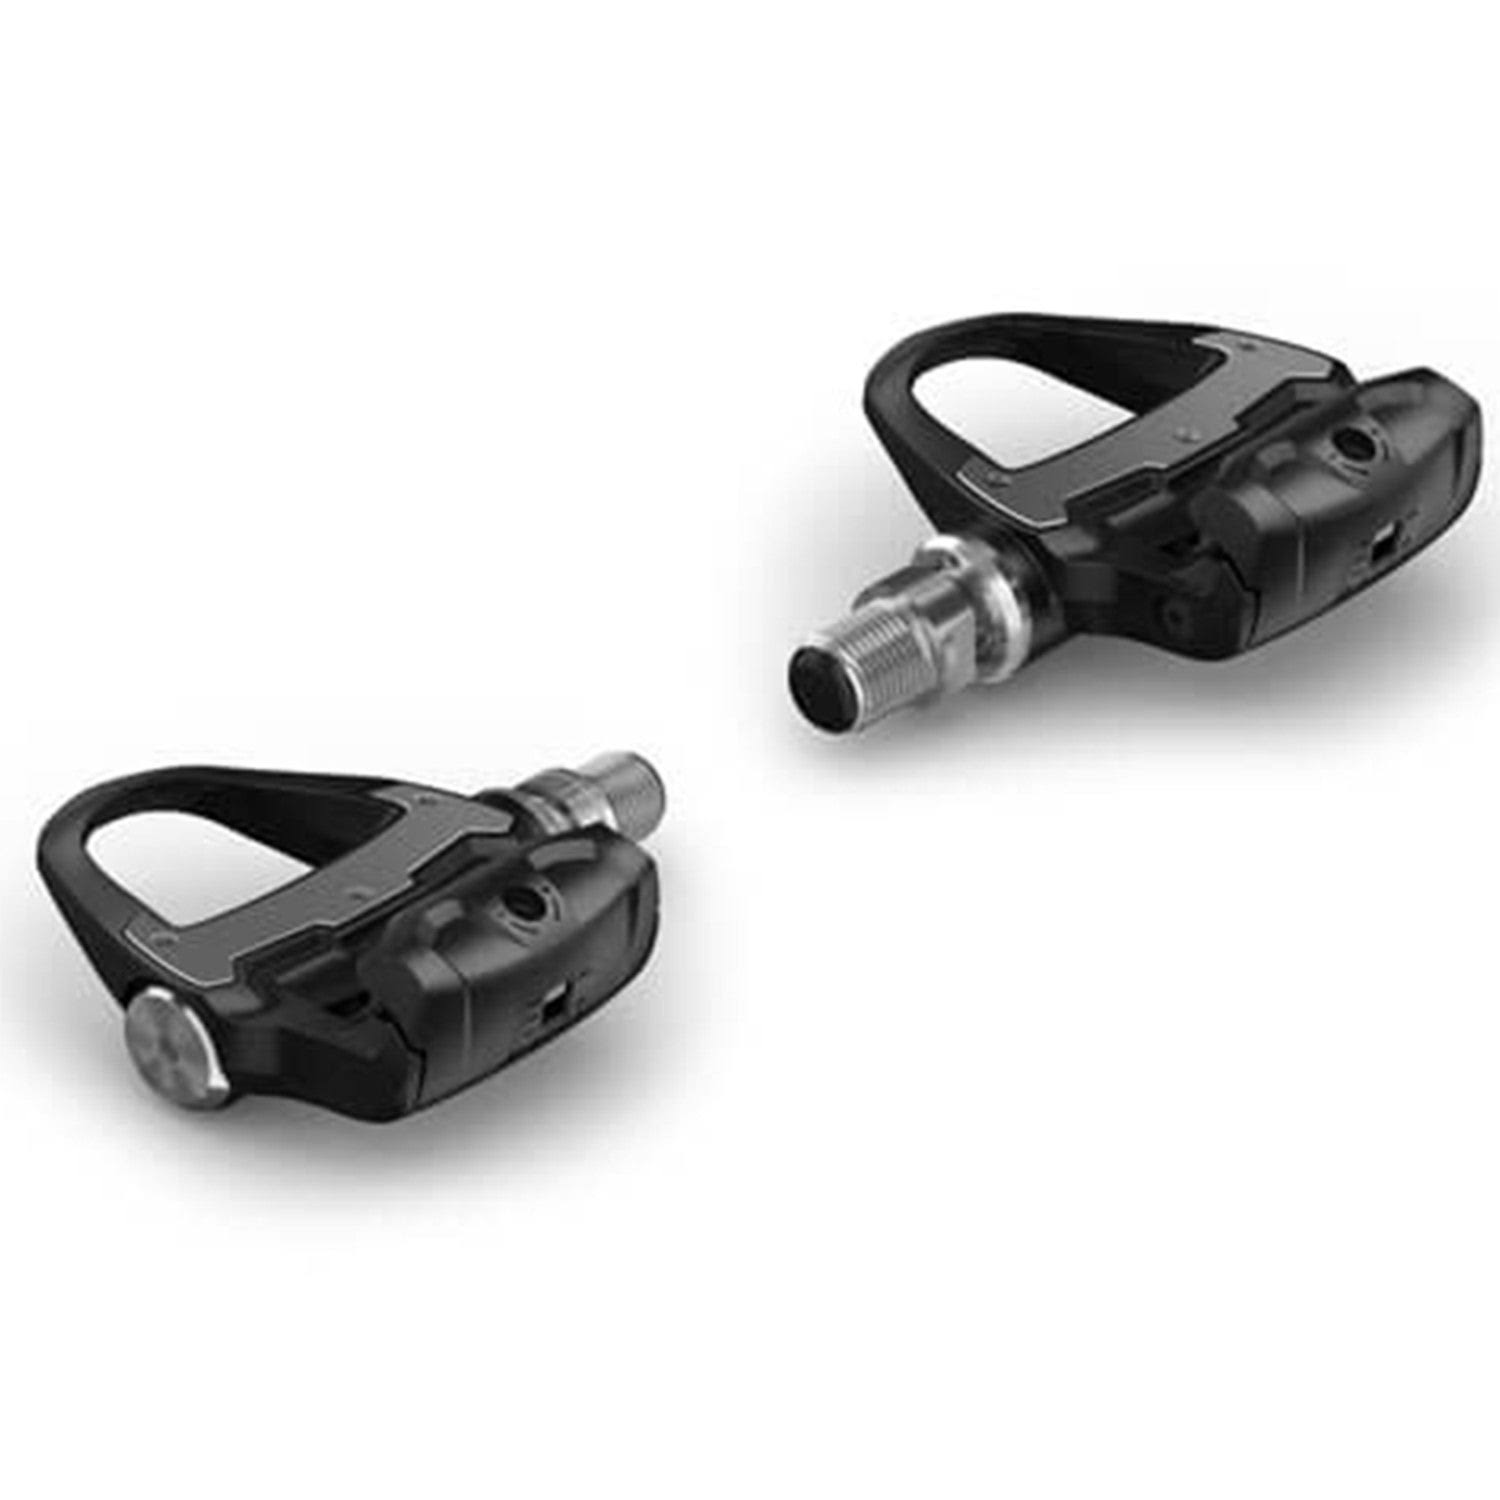 Garmin Rally RS200 Dual Sensing Power Meter Pedals